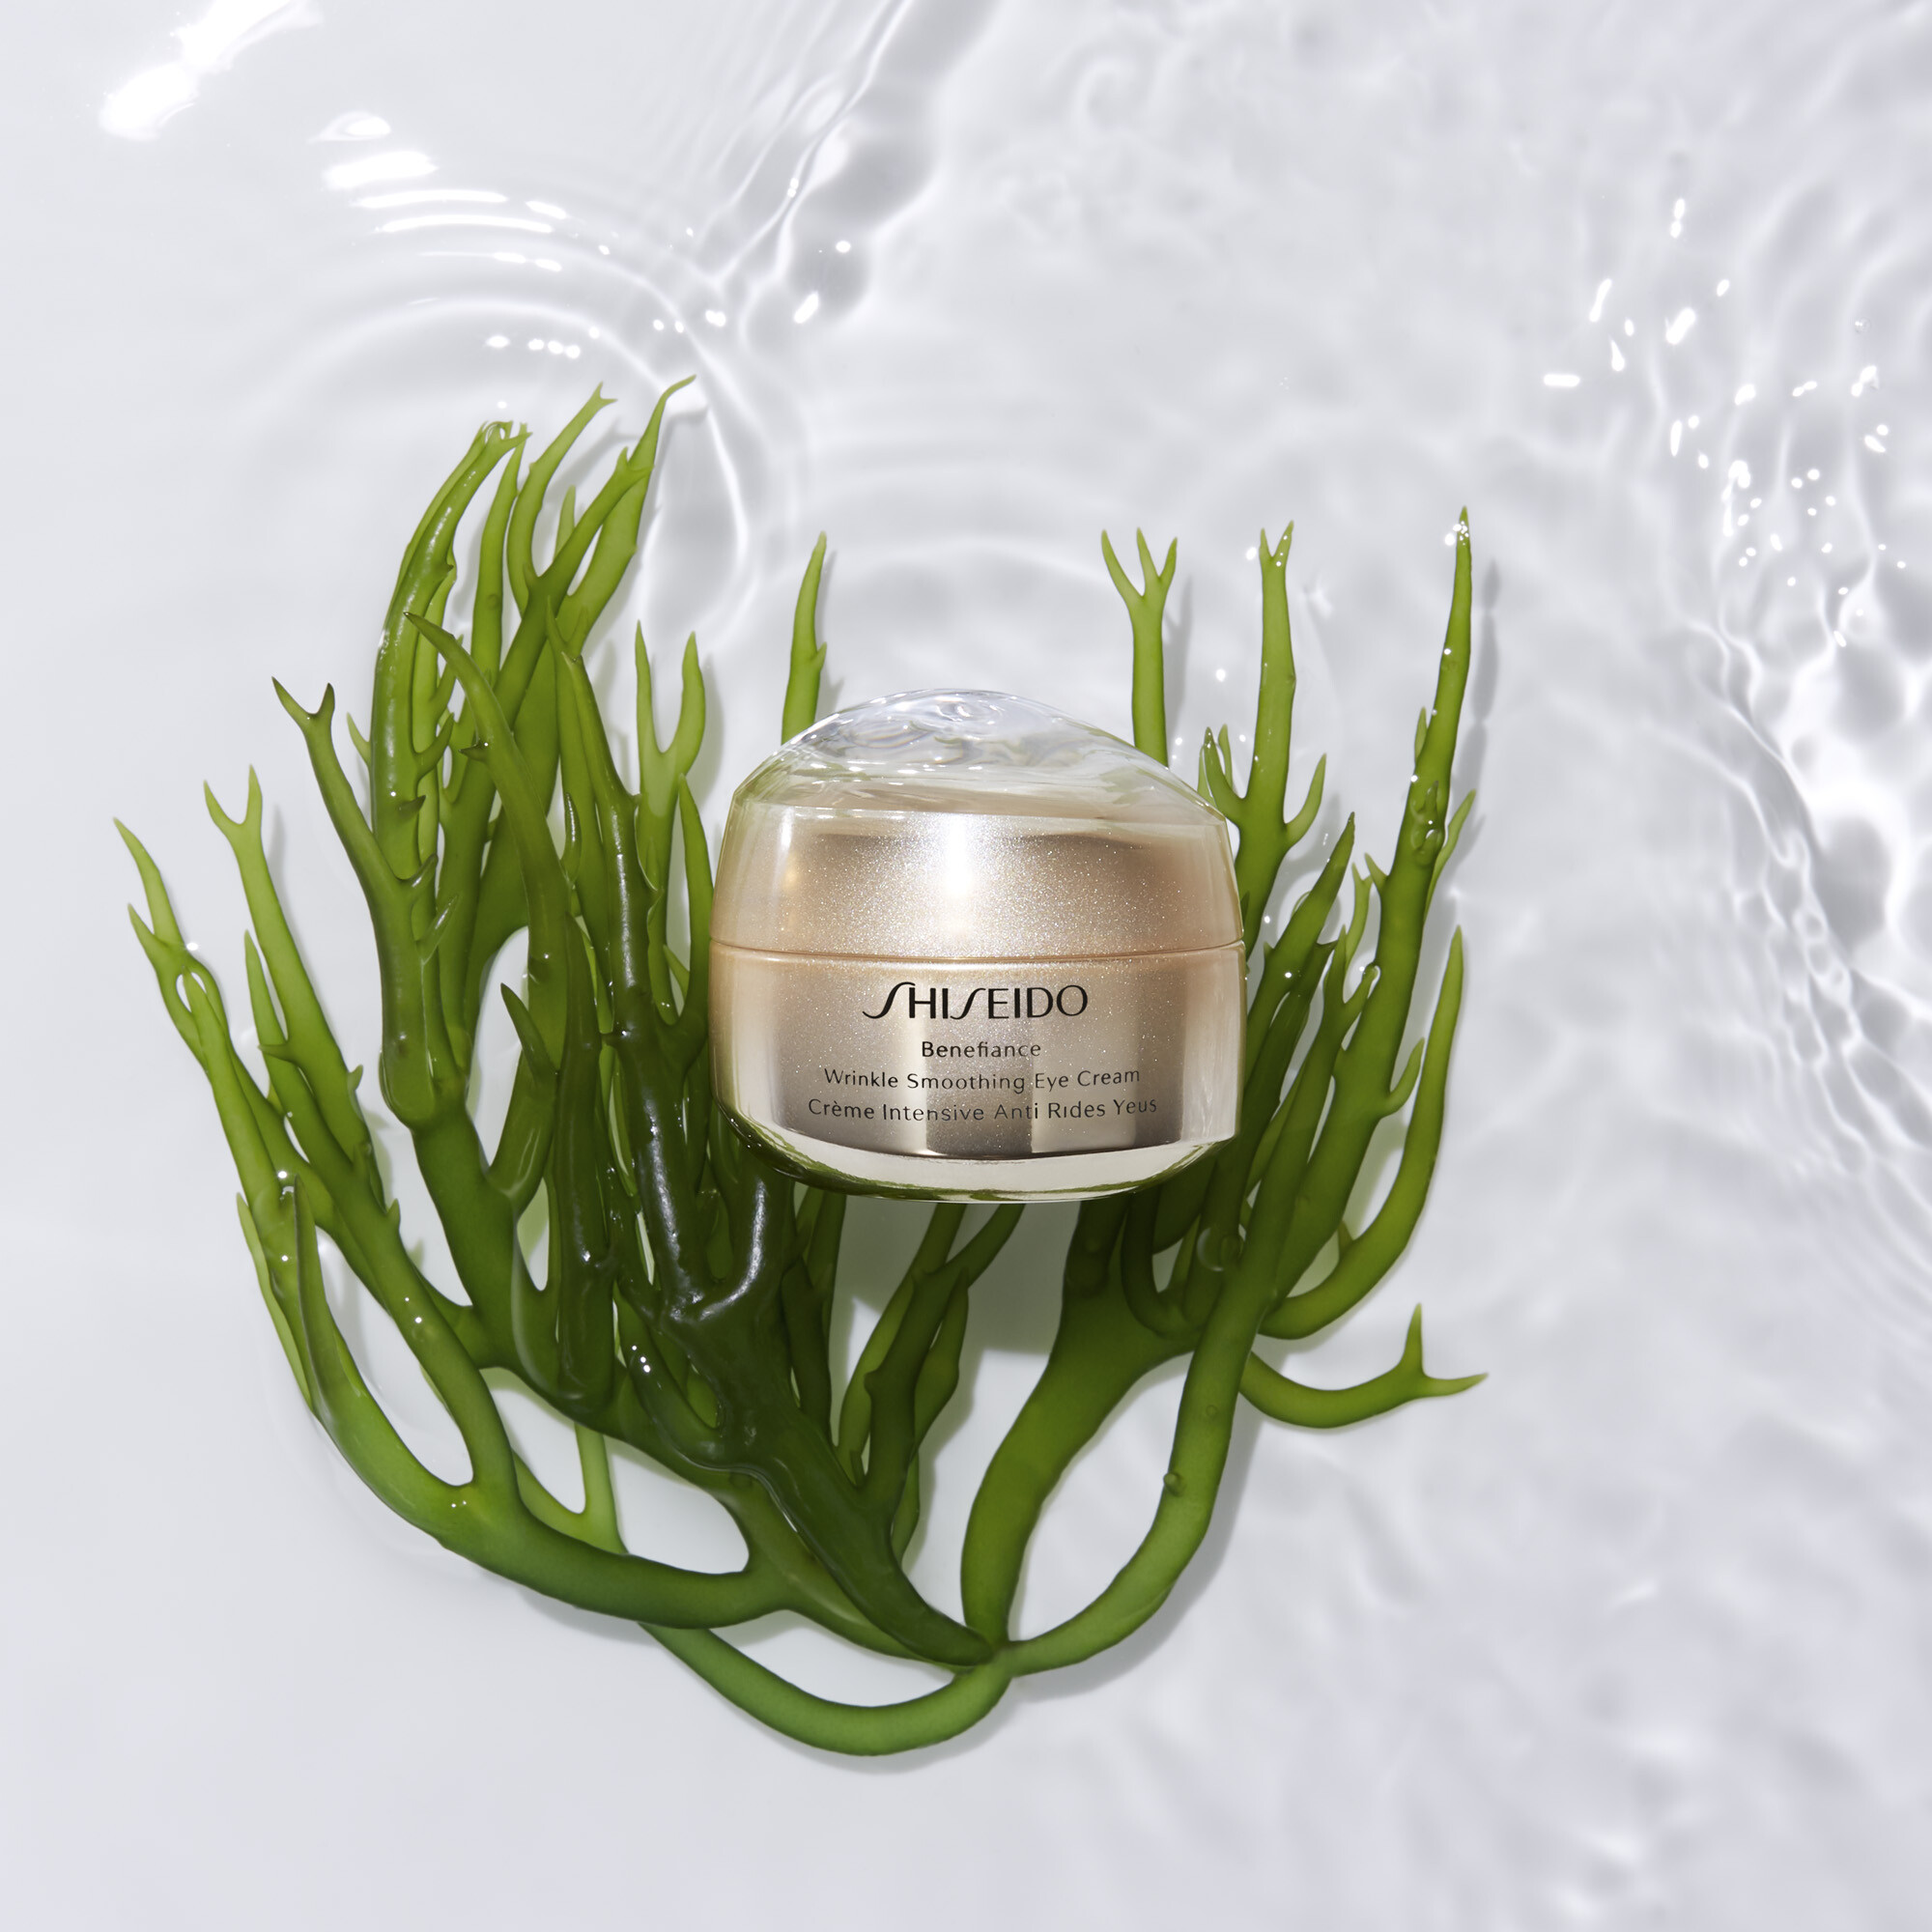 Nachtcreme Shiseido Benefiance Wrinkle Smoothing Eye Cream 15ml bestellen